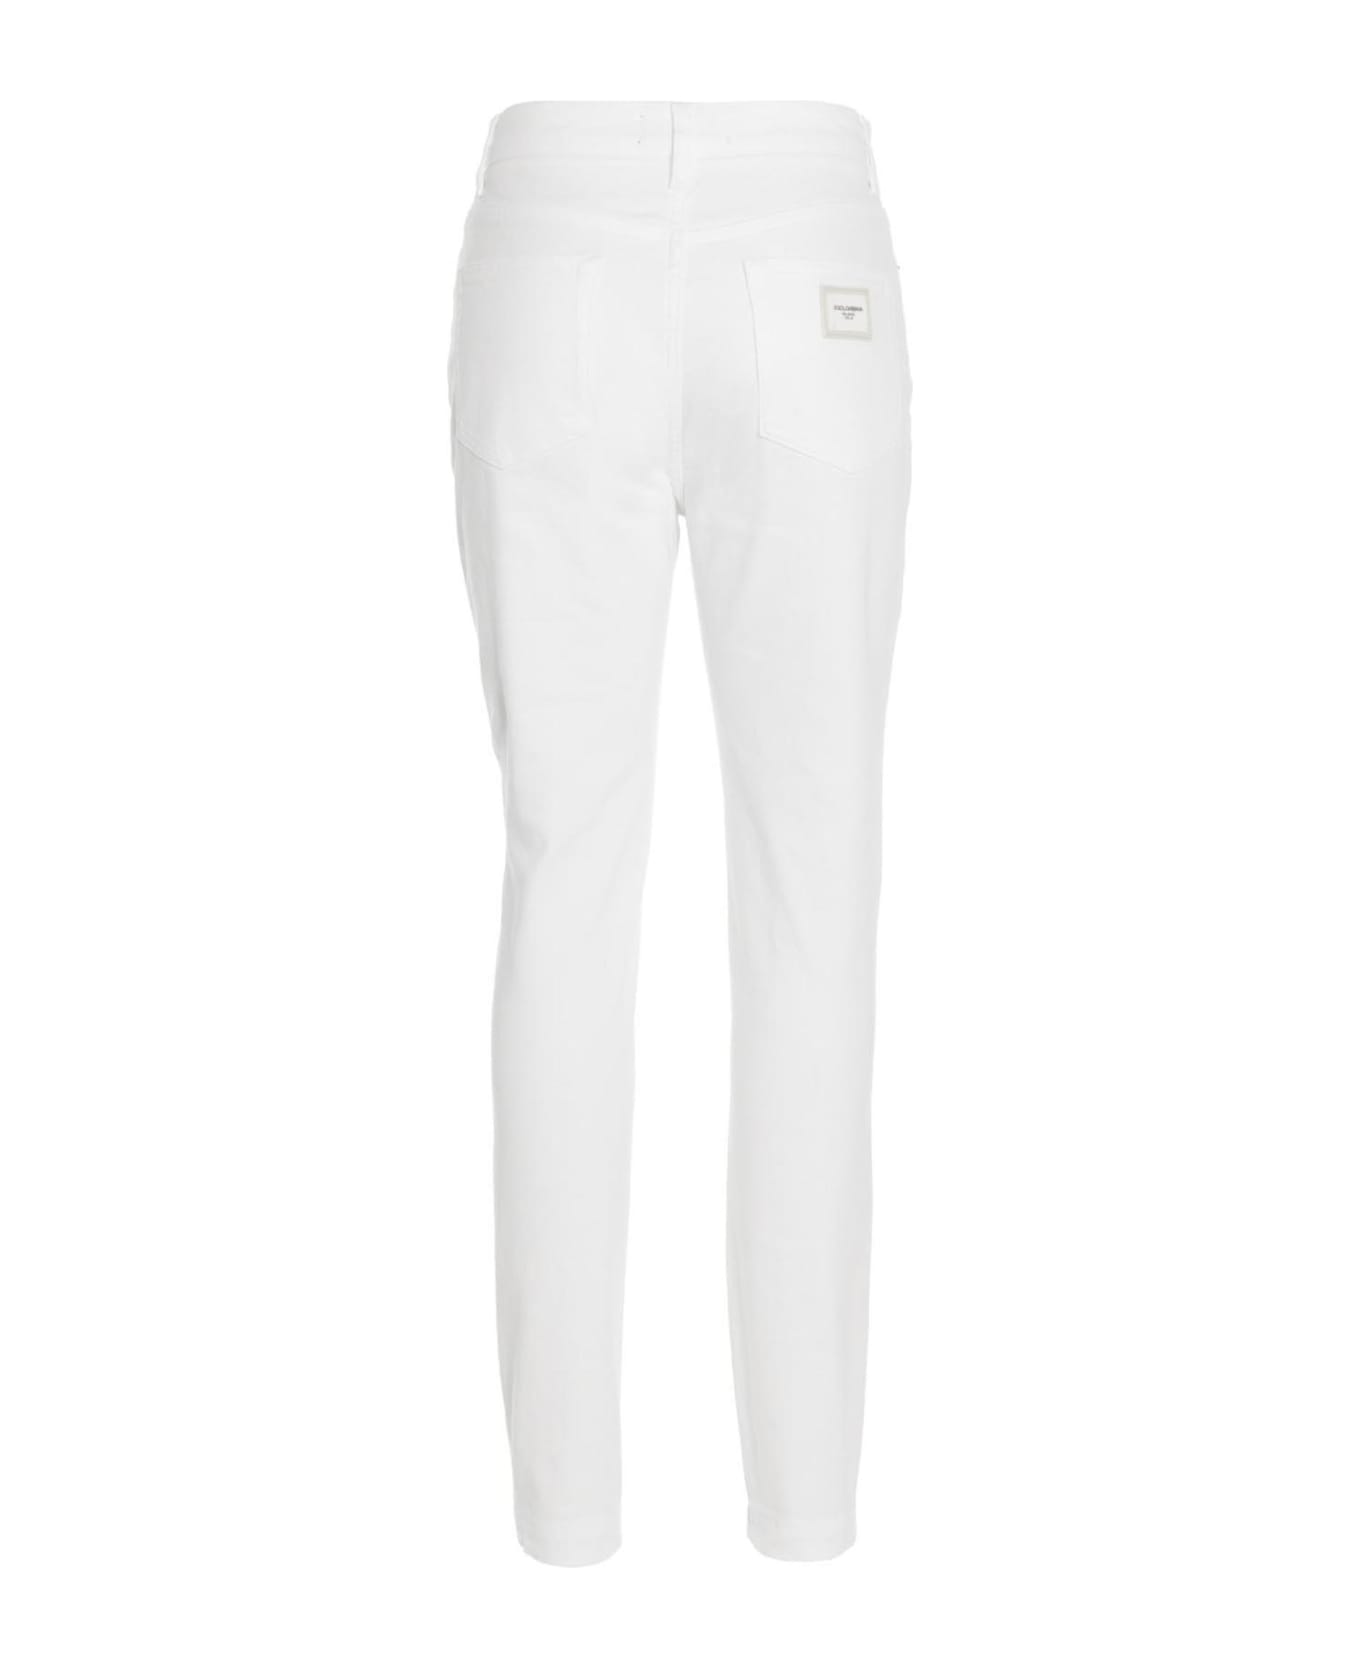 Dolce & Gabbana Audrey Jeans - White ボトムス